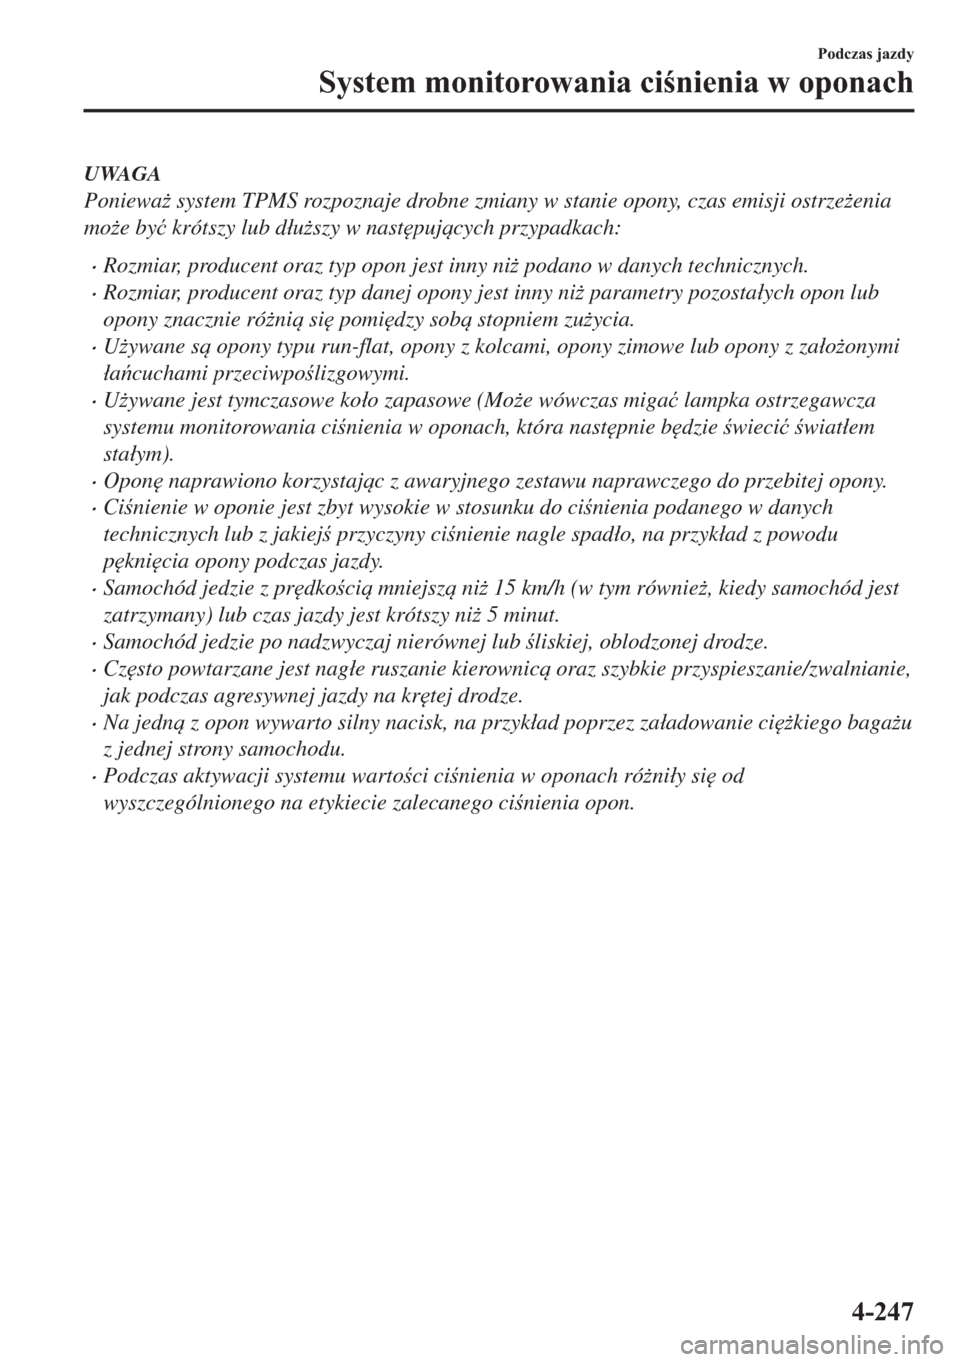 MAZDA MODEL 2 2019  Instrukcja Obsługi (in Polish) UWAGA
Poniewa* system TPMS rozpoznaje drobne zmiany w stanie opony, czas emisji ostrze*enia
mo*e by�ü krótszy lub d�áu*szy w nast
pujcych przypadkach:
�xRozmiar, producent oraz typ opon jest